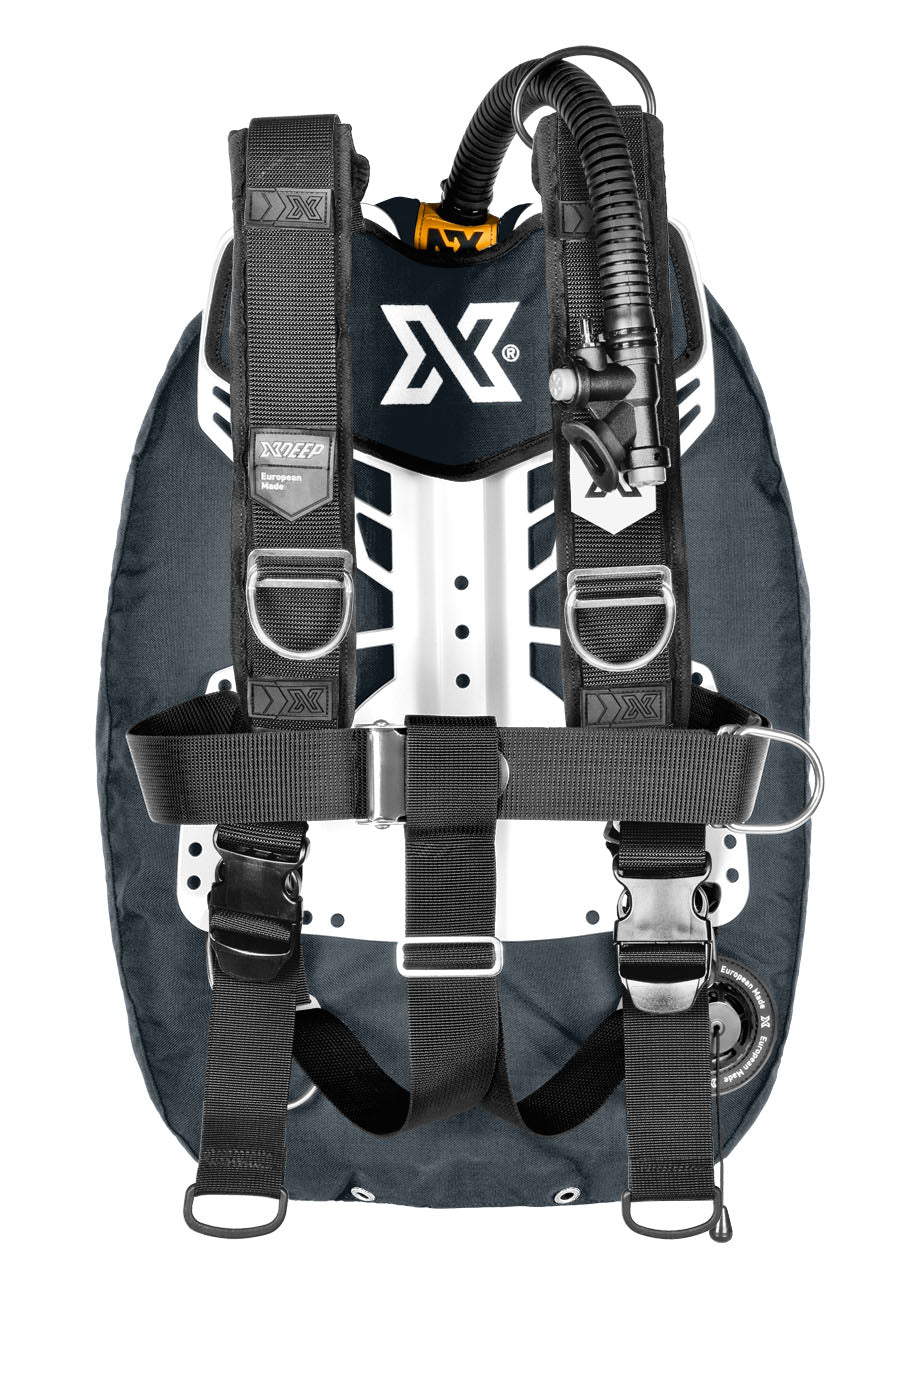 XDEEP XDEEP Zen Ultralight Wing System Deluxe / Small / Dark Grey - Oyster Diving